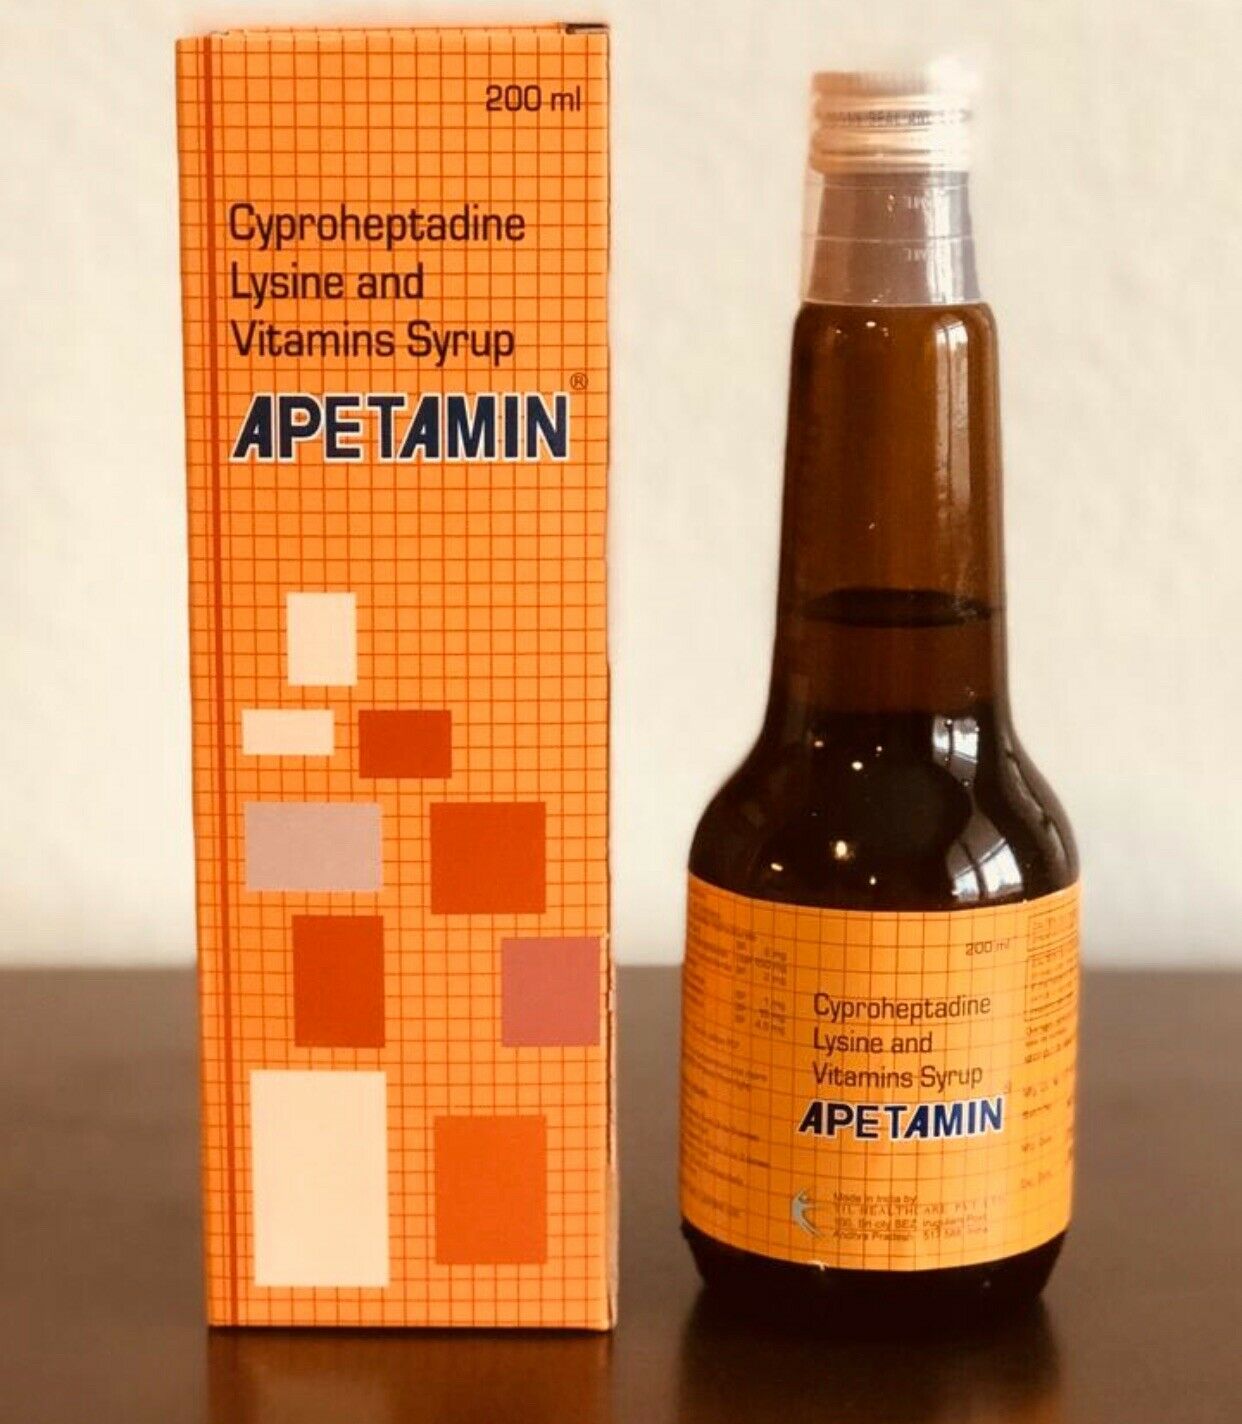 Apetamin drink-2 bottles